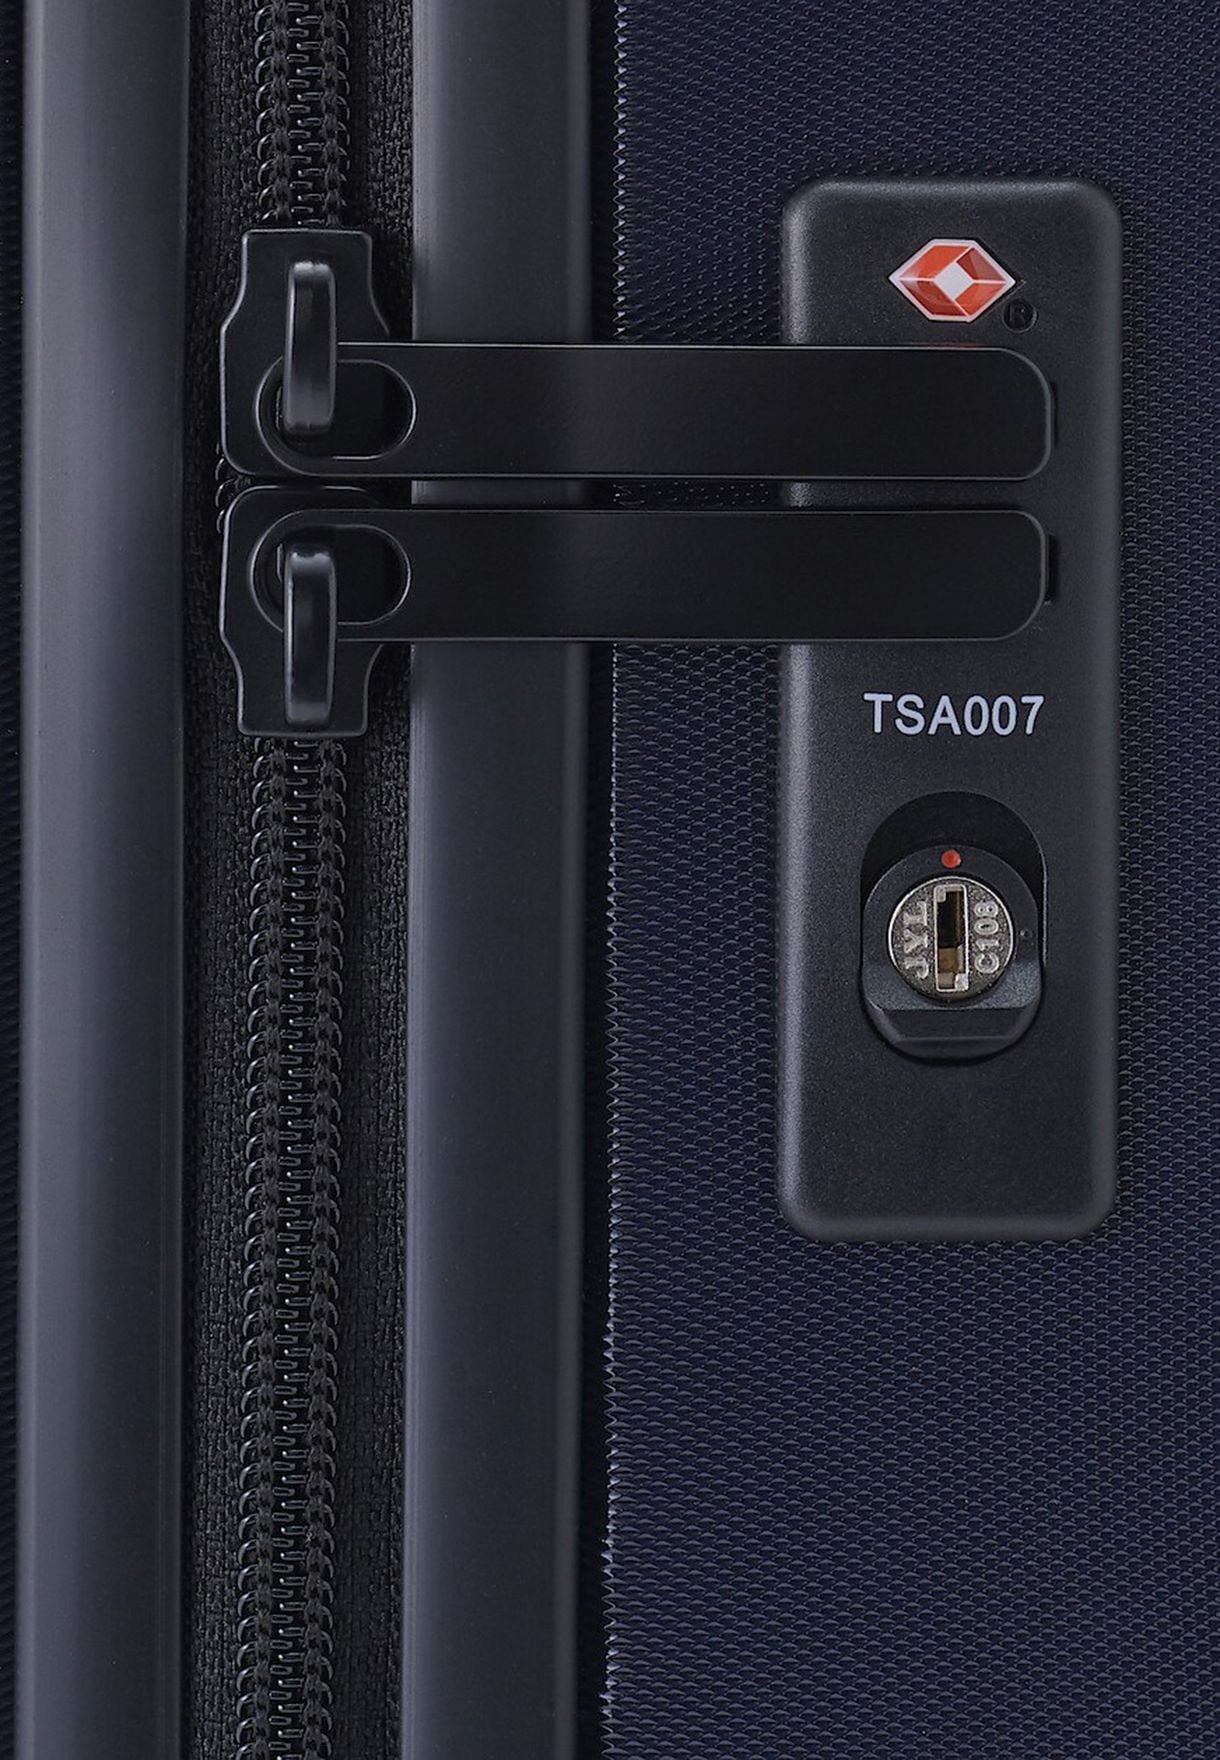 Handle Adjustable Hard Carry Suitcase 105L